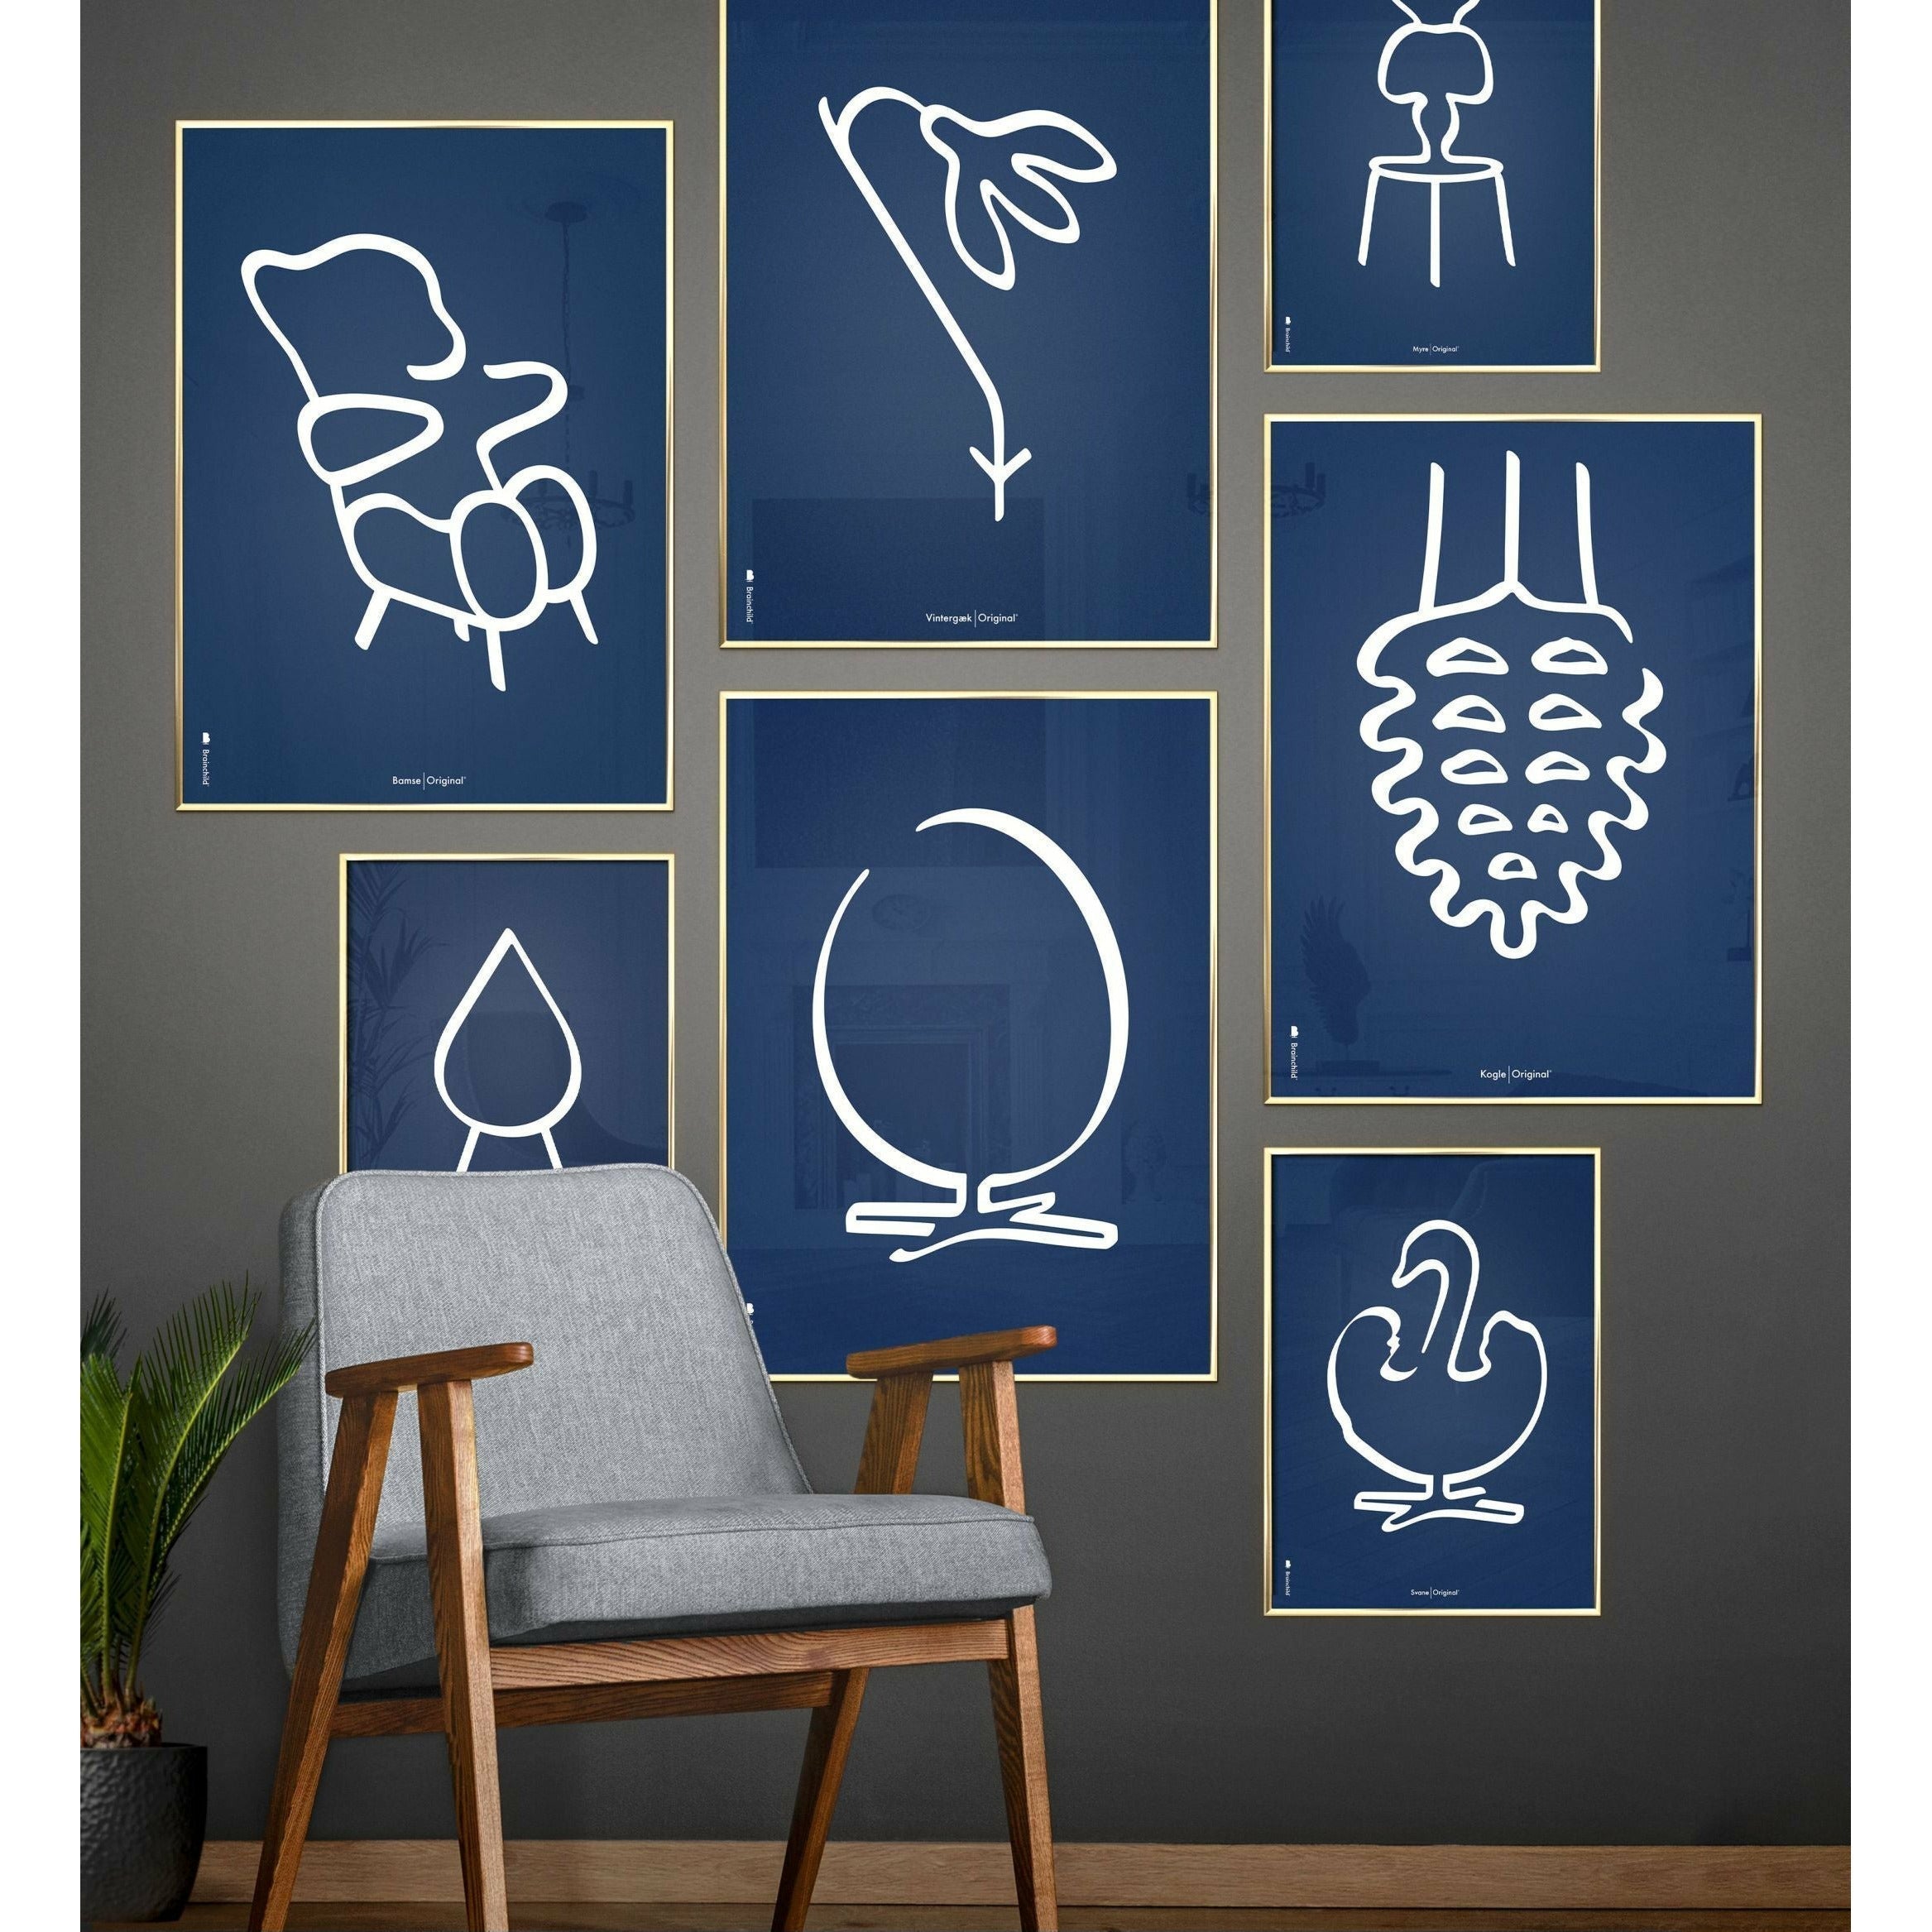 Brainchild Snowdrop Line Poster, Frame Made Of Light Wood 30x40 Cm, Blue Background